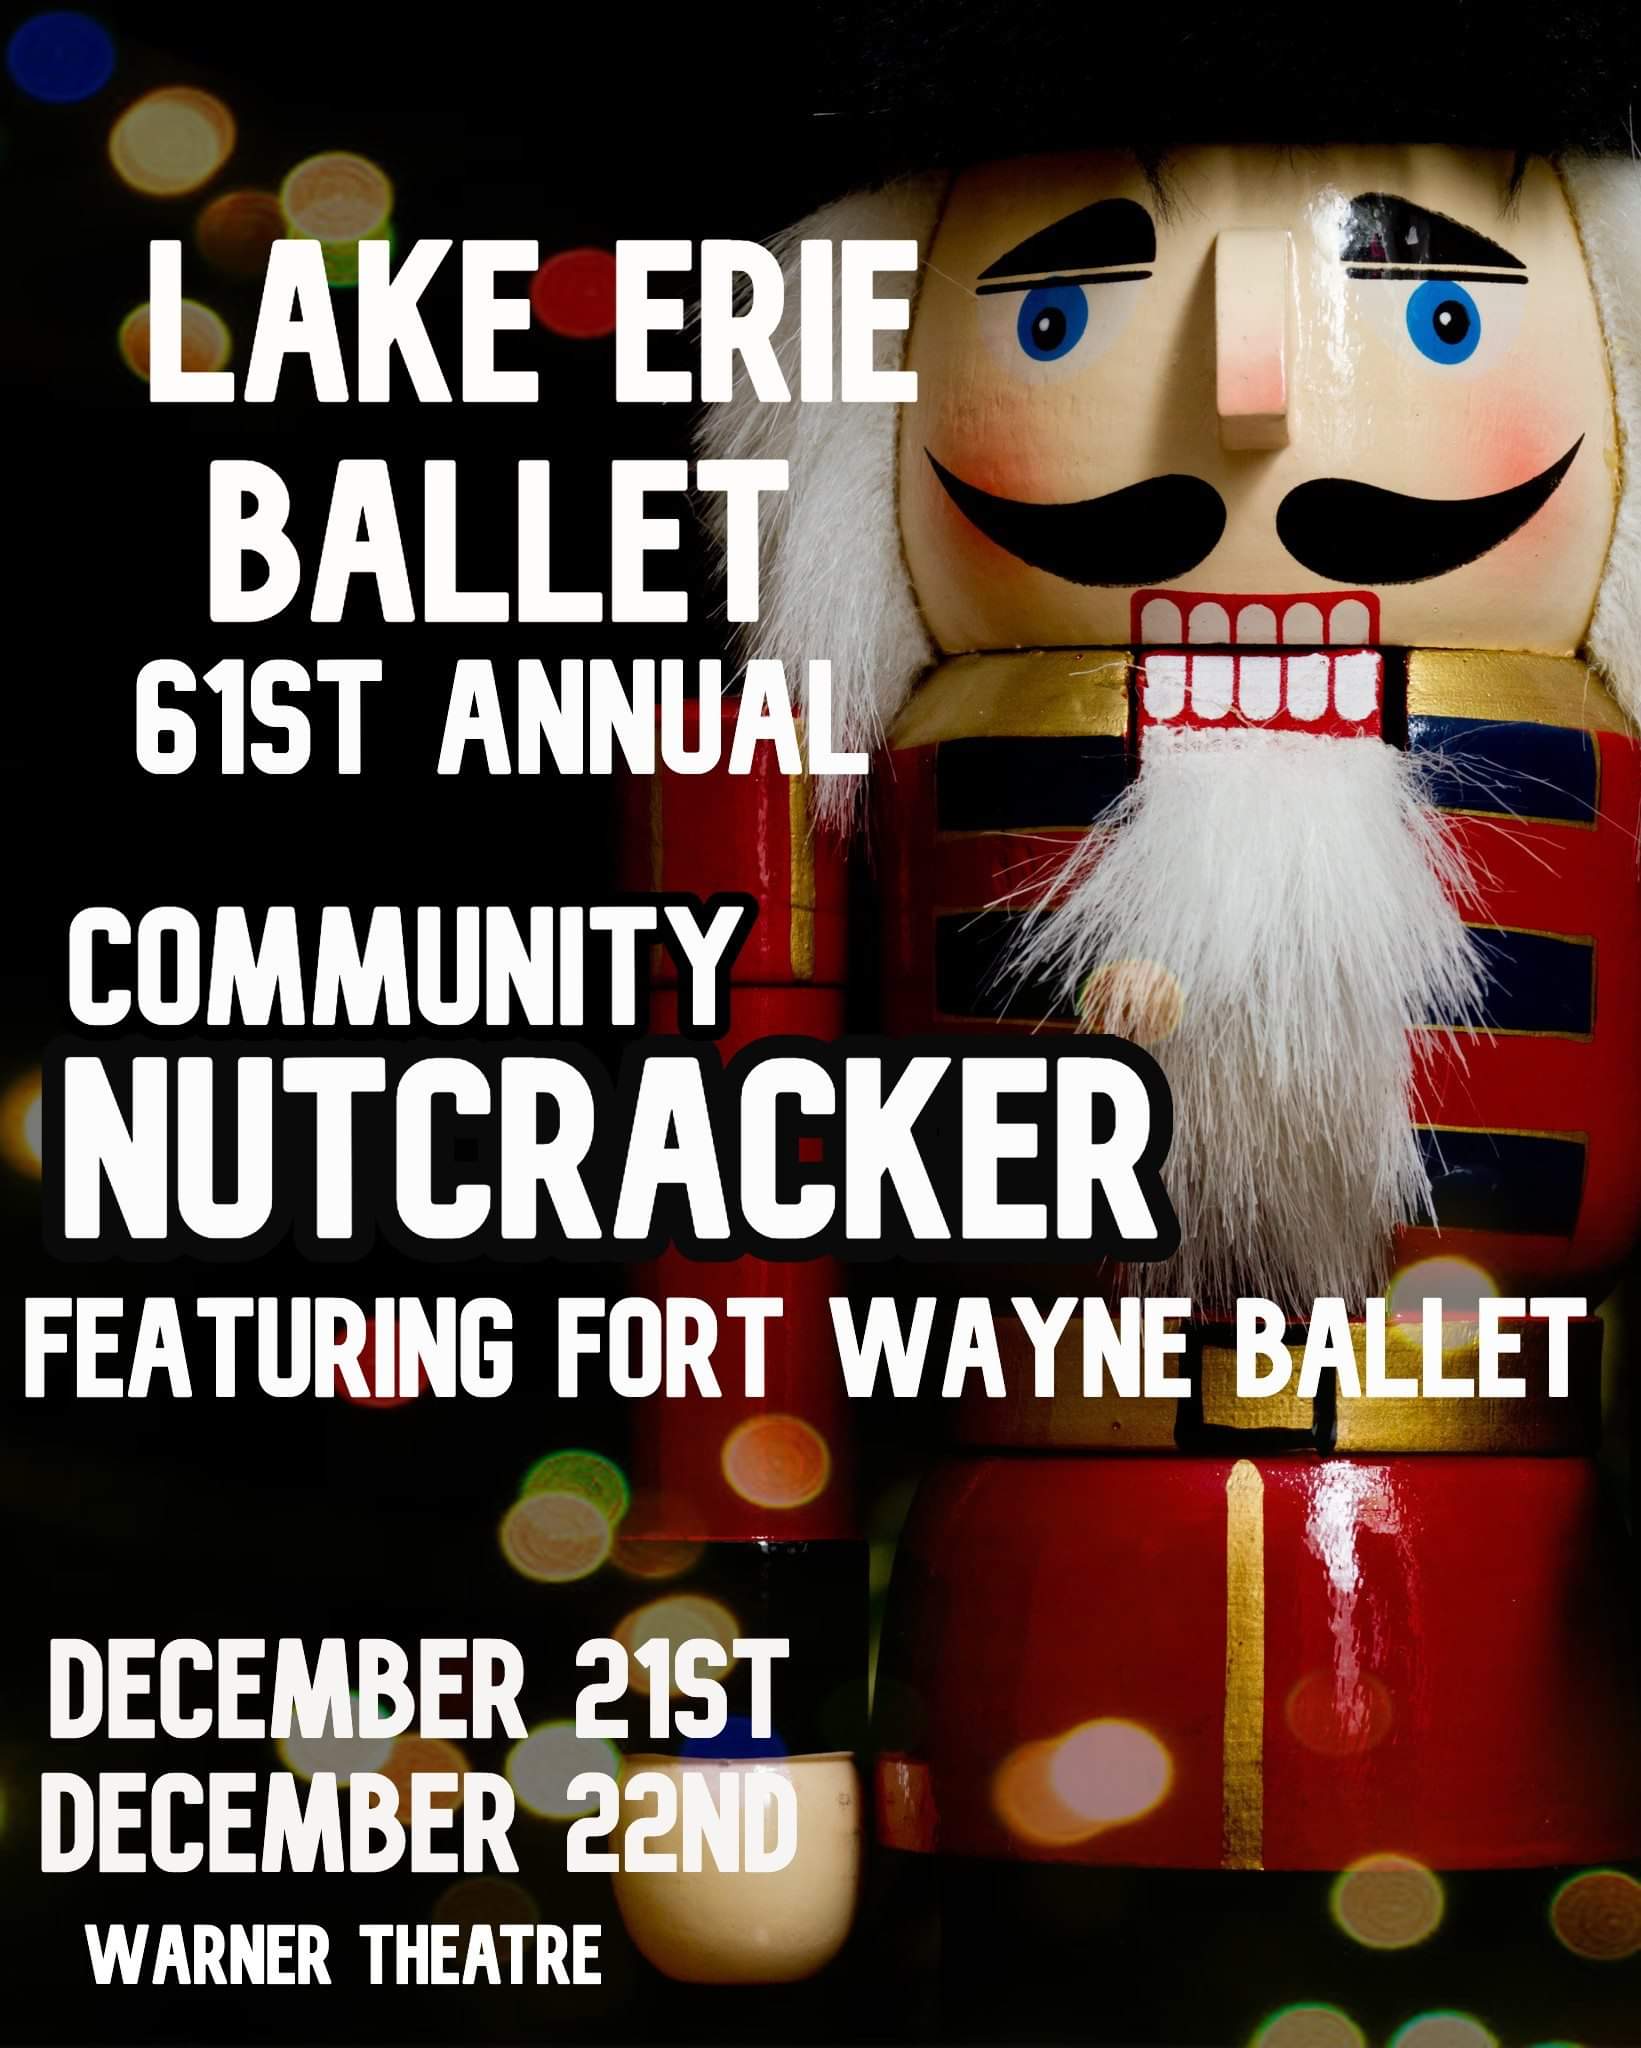 Lake Erie Ballet's "Community Nutcracker" featuring Fort Wayne Ballet